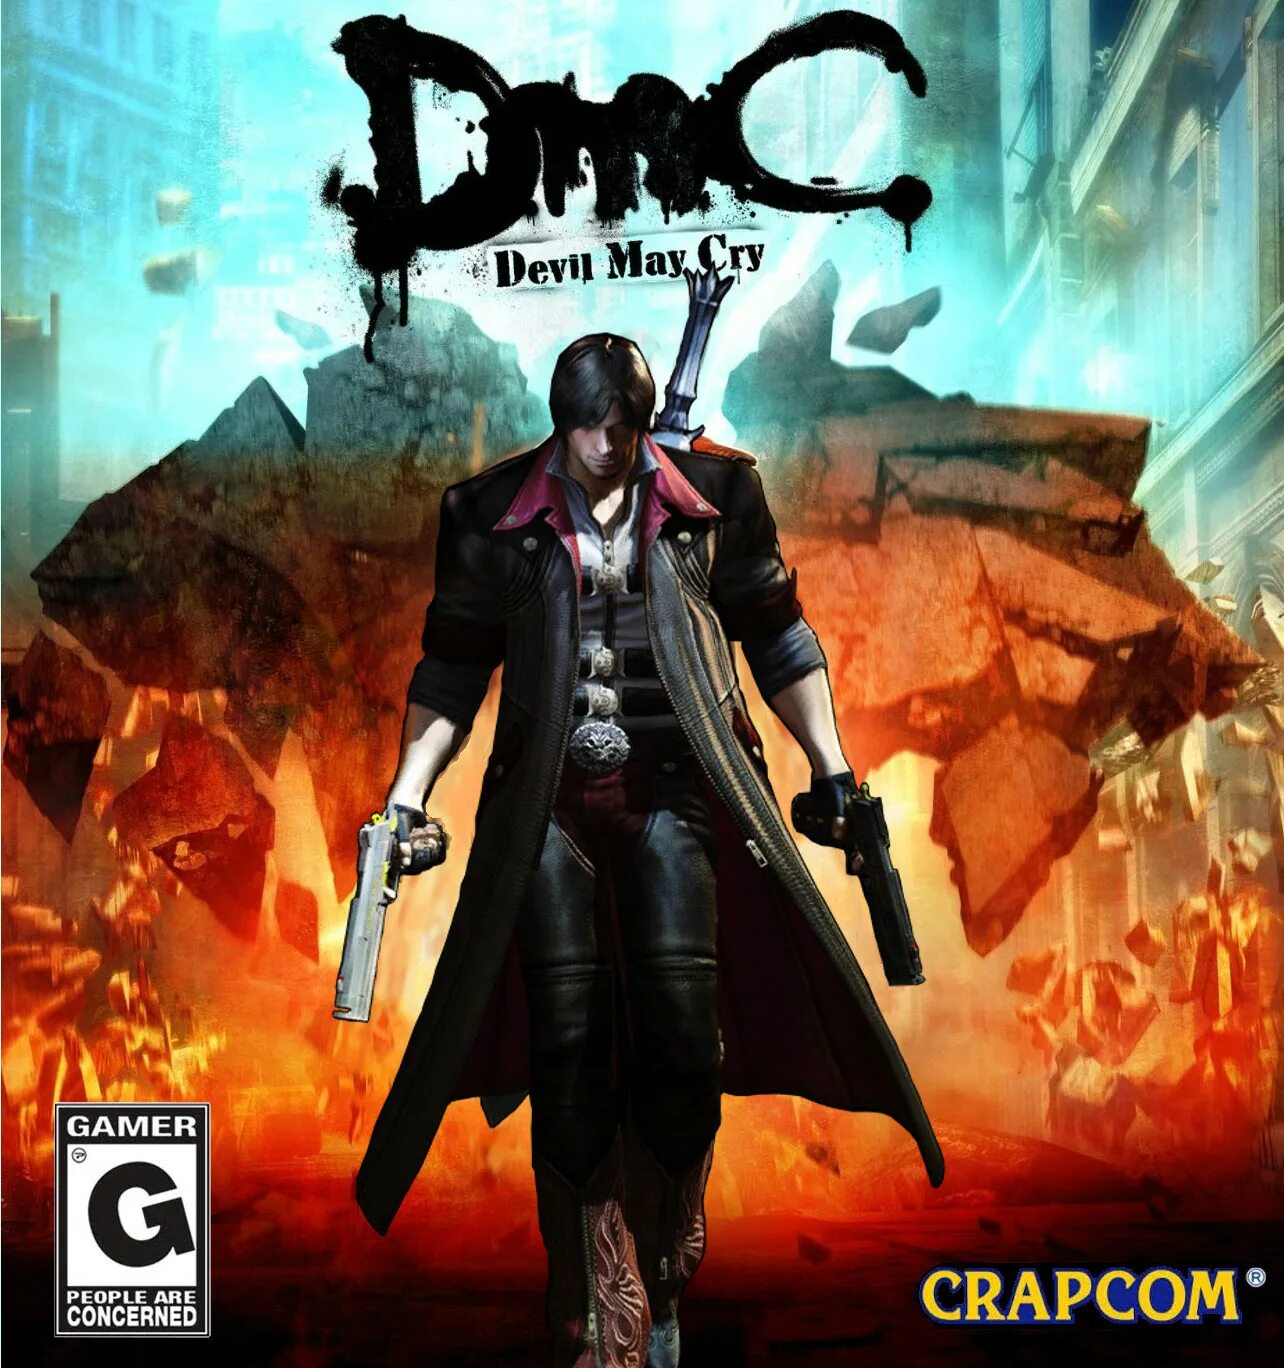 DMC: Devil May Cry. Definitive Edition. Devil my Cry Definitive Edition. Devil May Cry DMC Definitive. Dmc devil may definitive edition